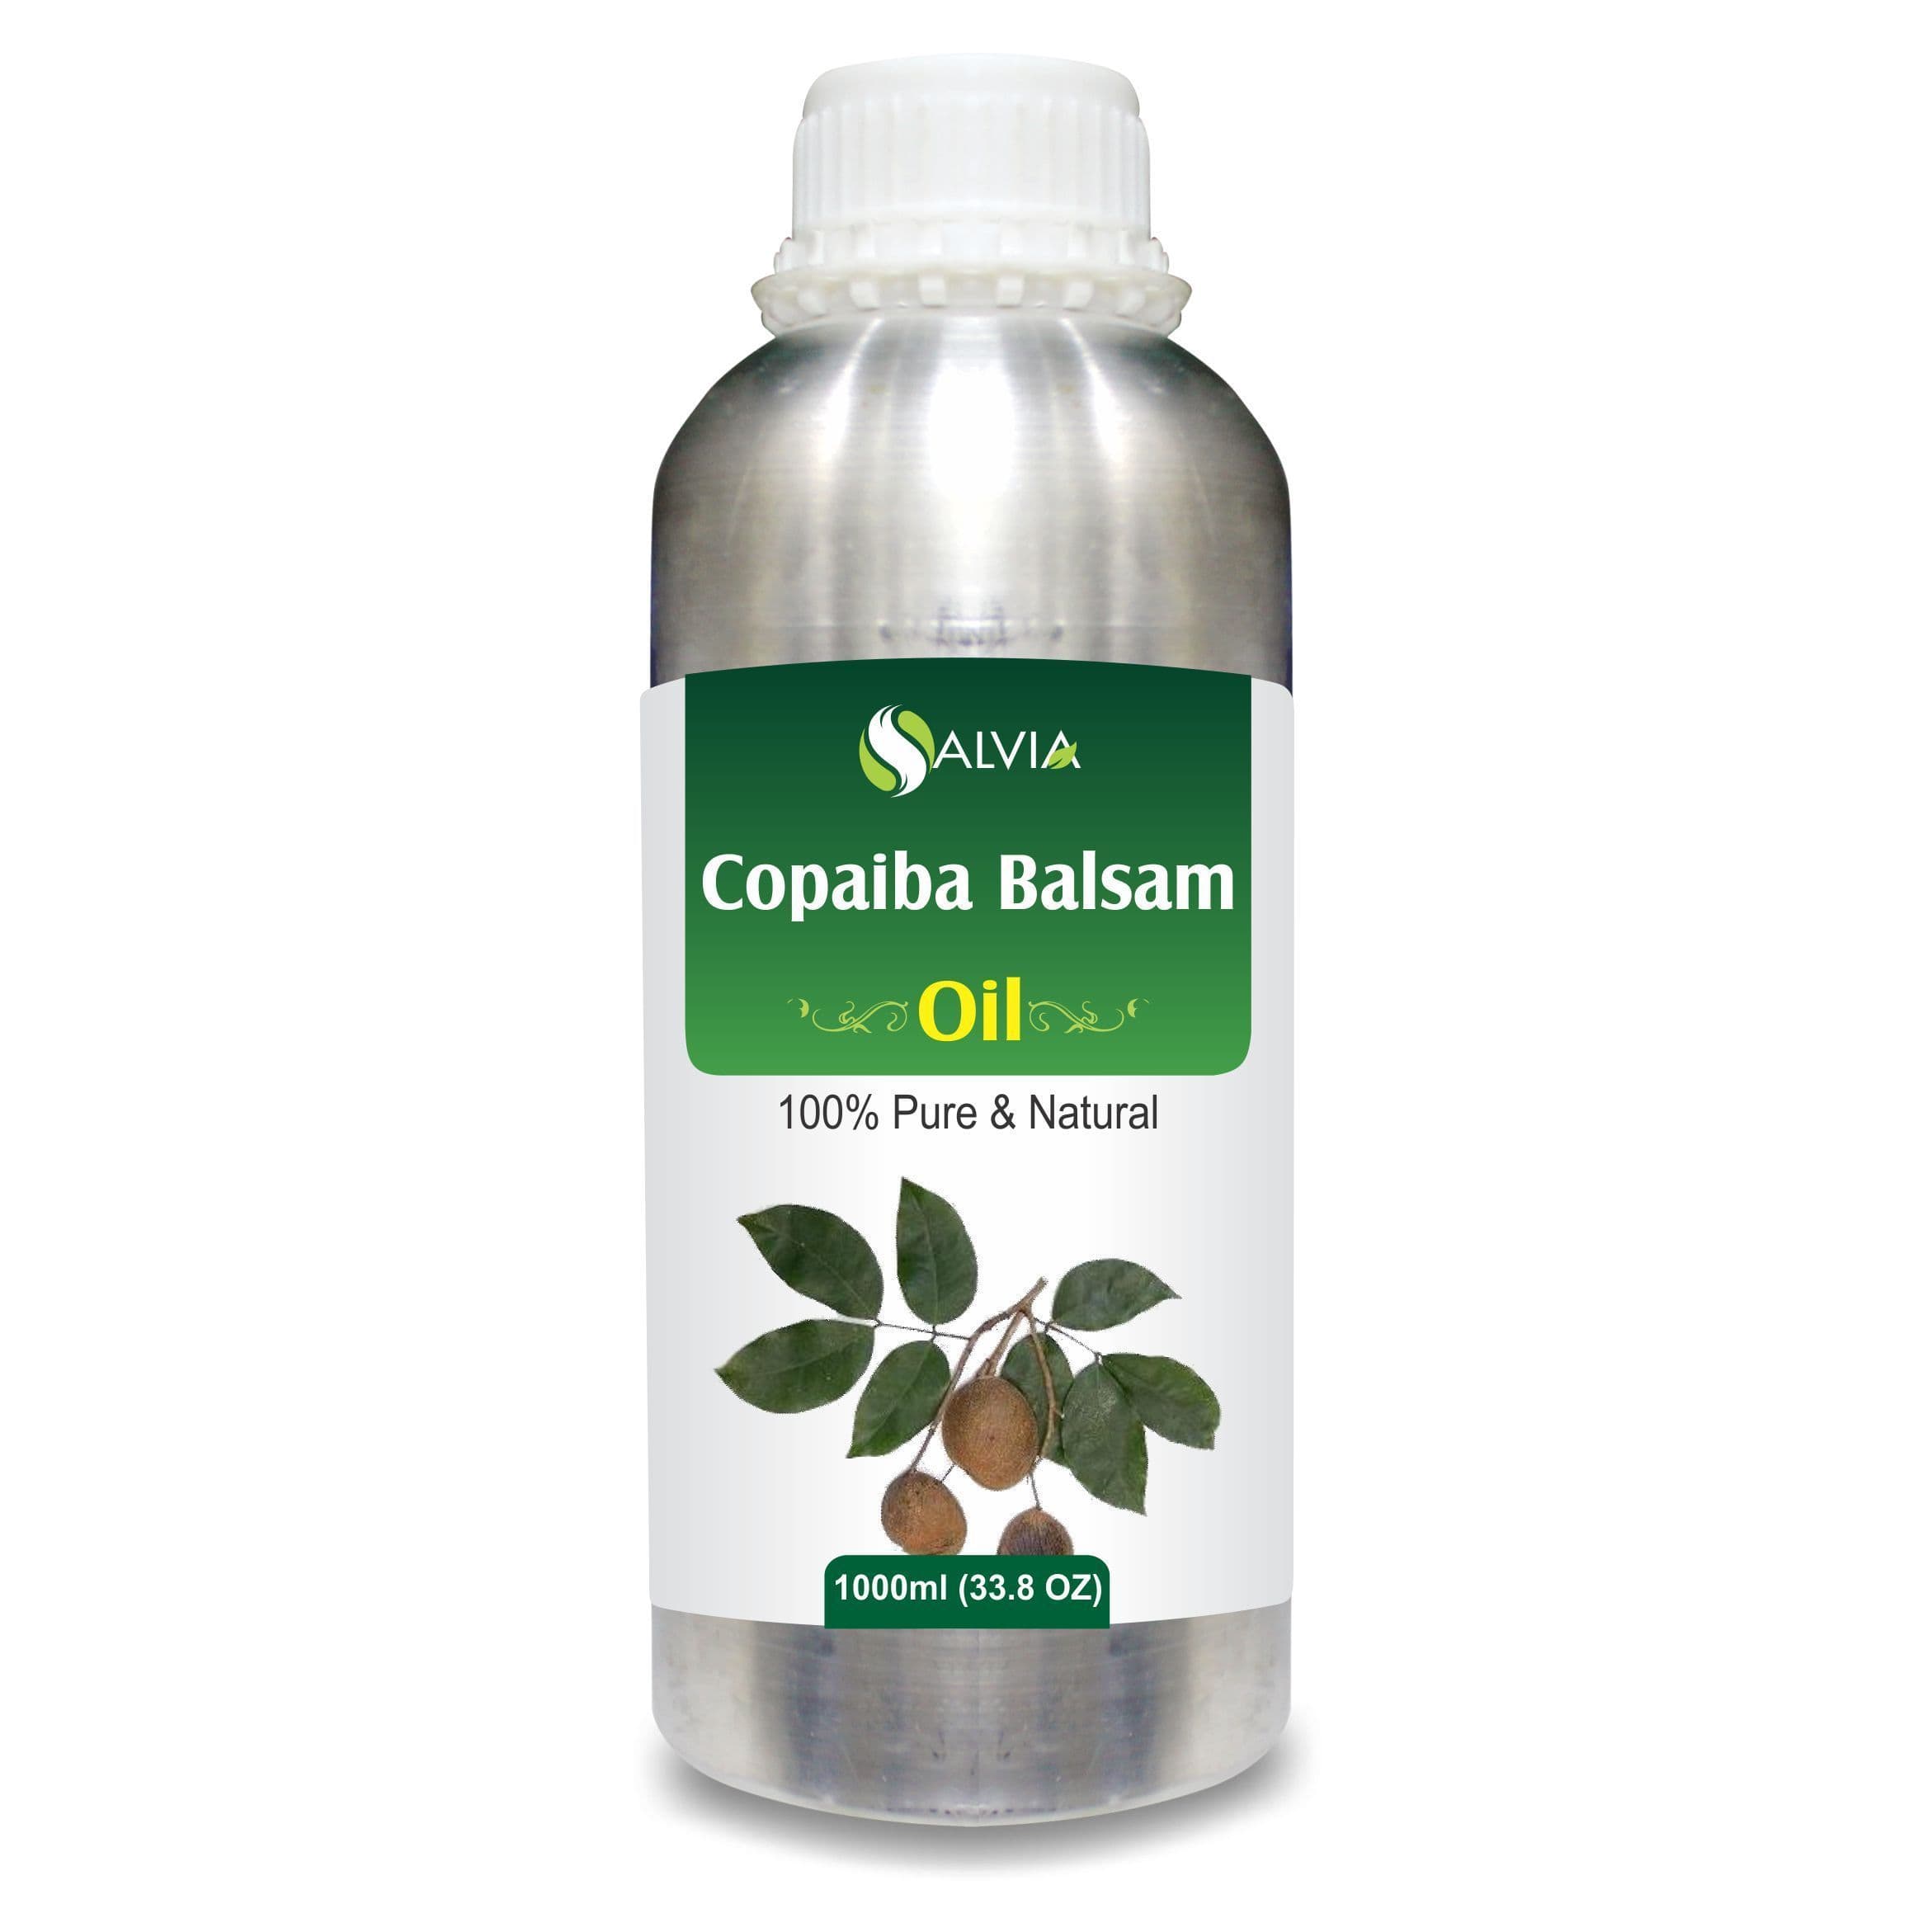 copaiba oil benefits